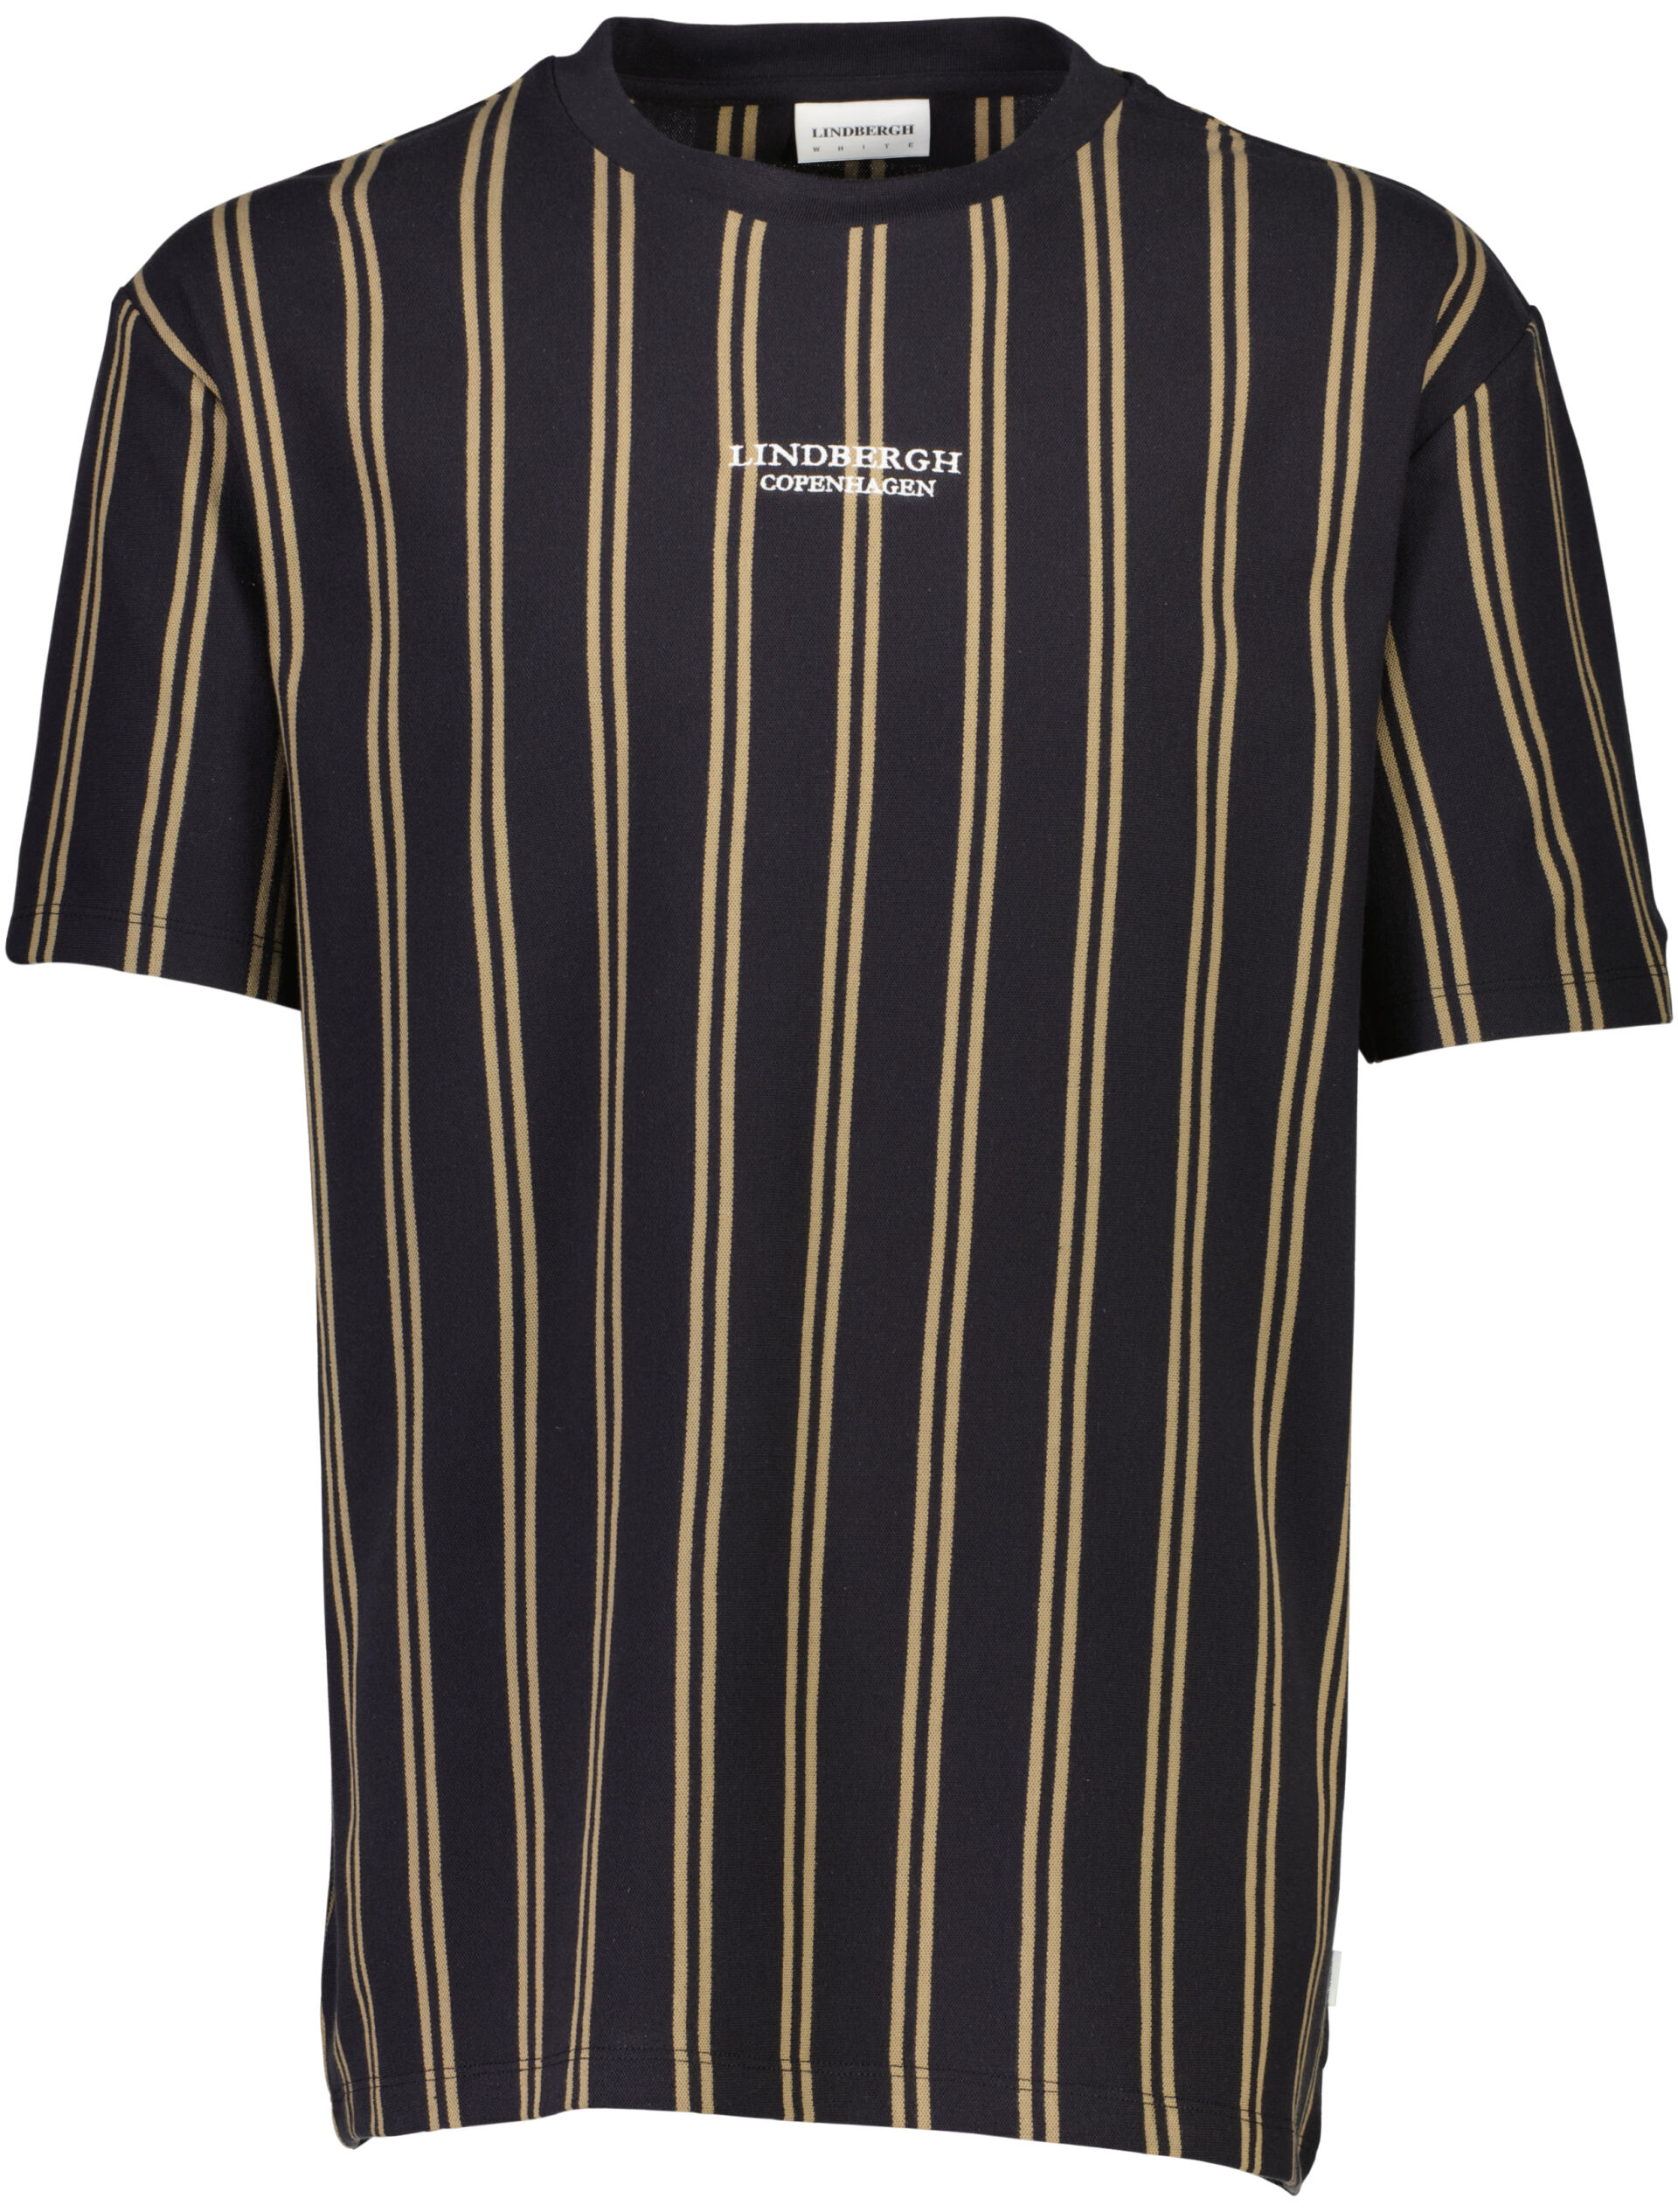 Lindbergh  T-shirt 30-400248